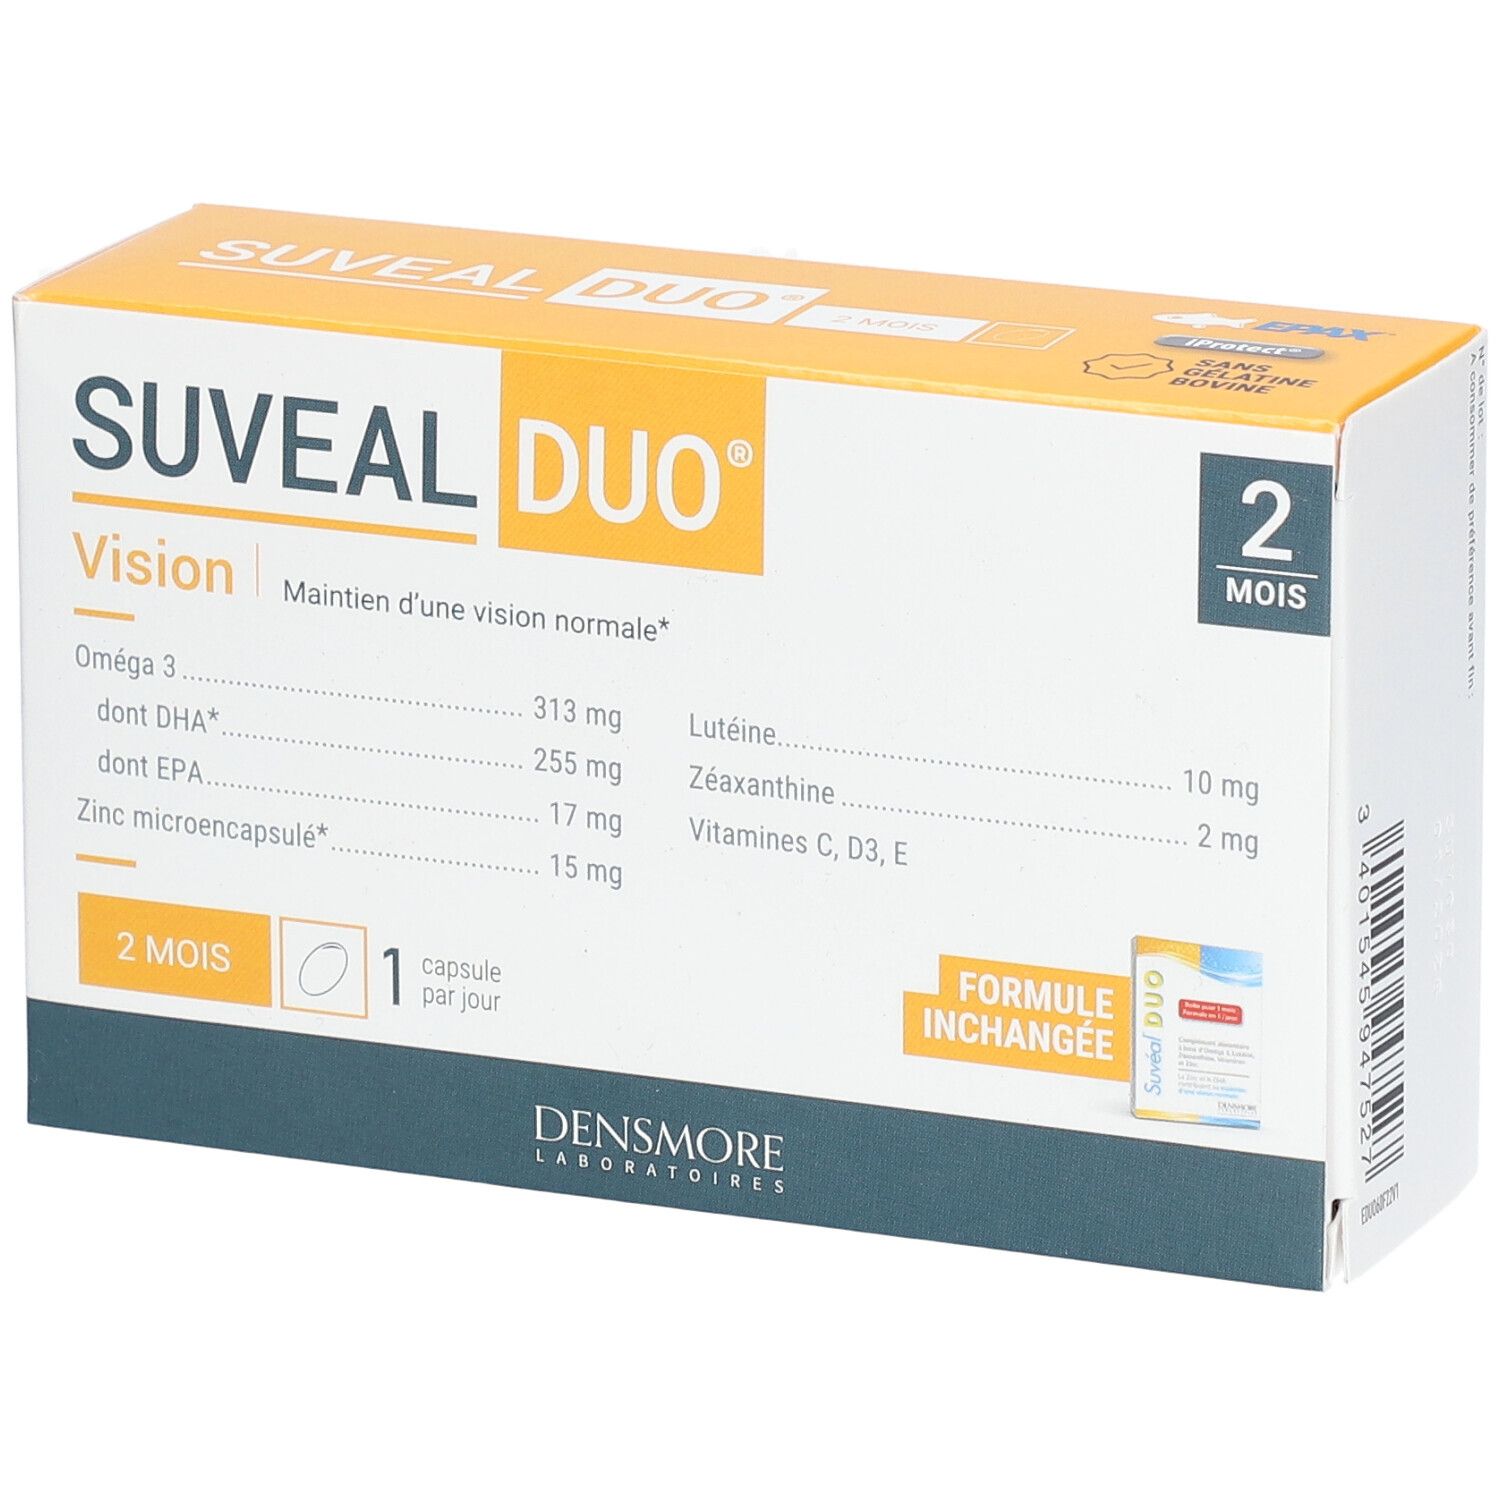 Suvéal® DUO Boite 2 mois 60 capsules